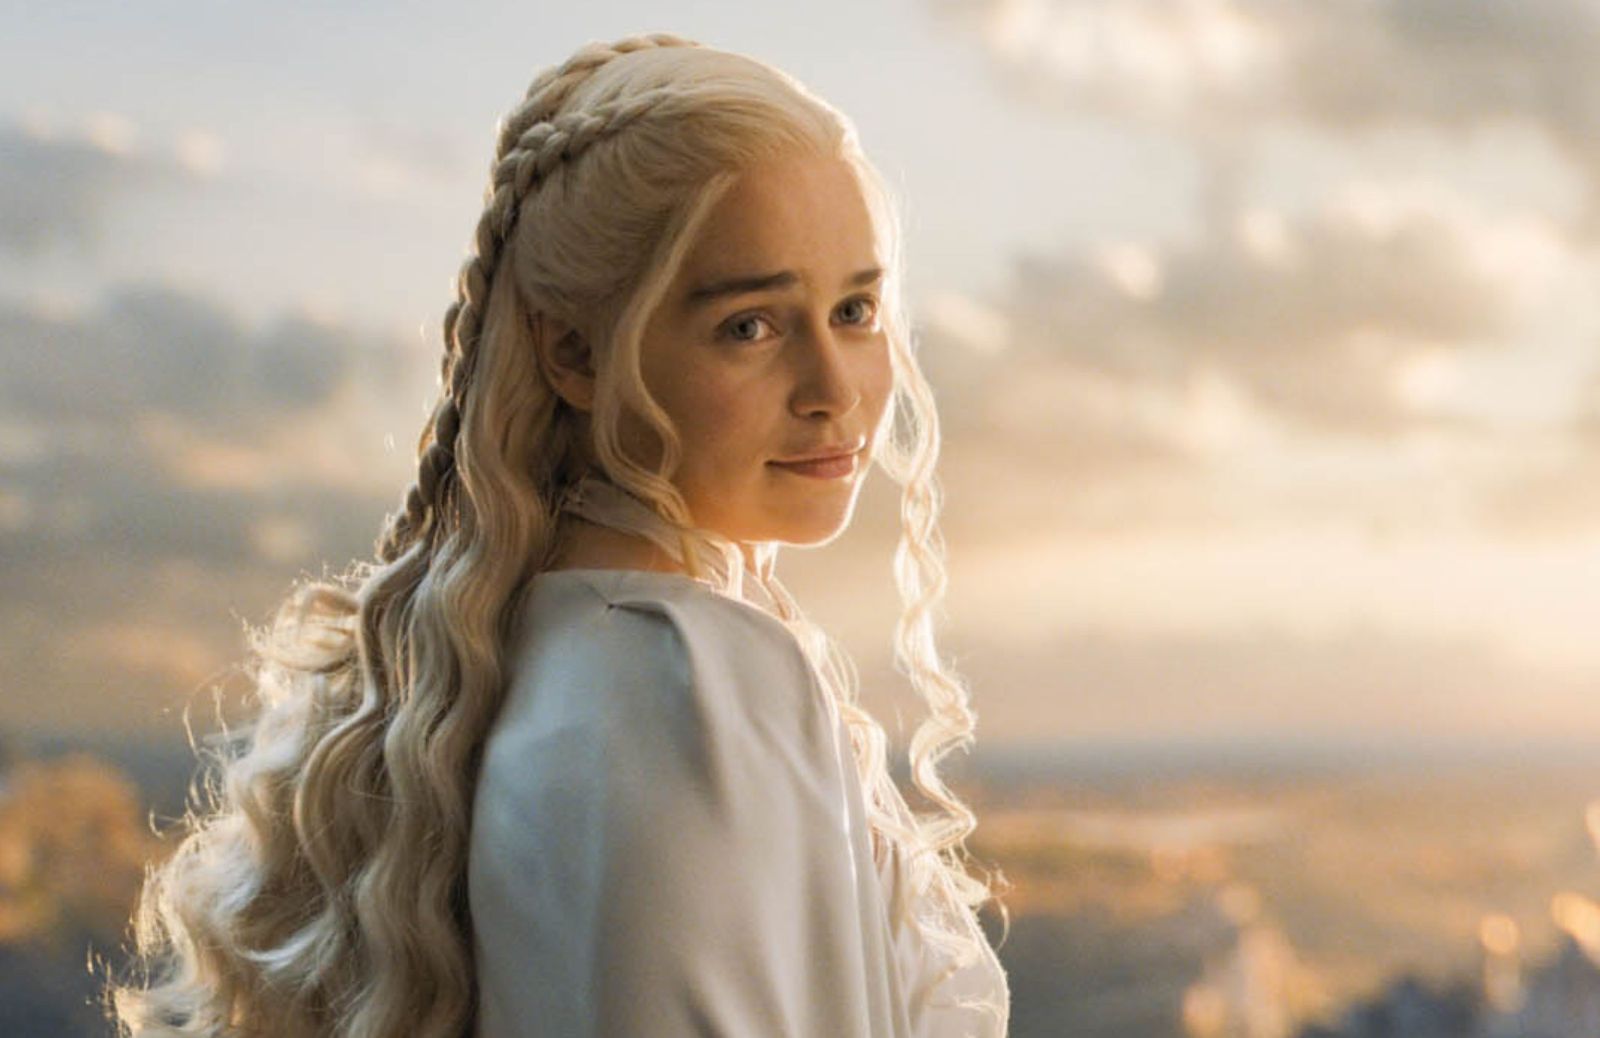 Emilia Clarke: i 10 momenti più belli di Daenerys Targaryen ne “Il trono di spade”